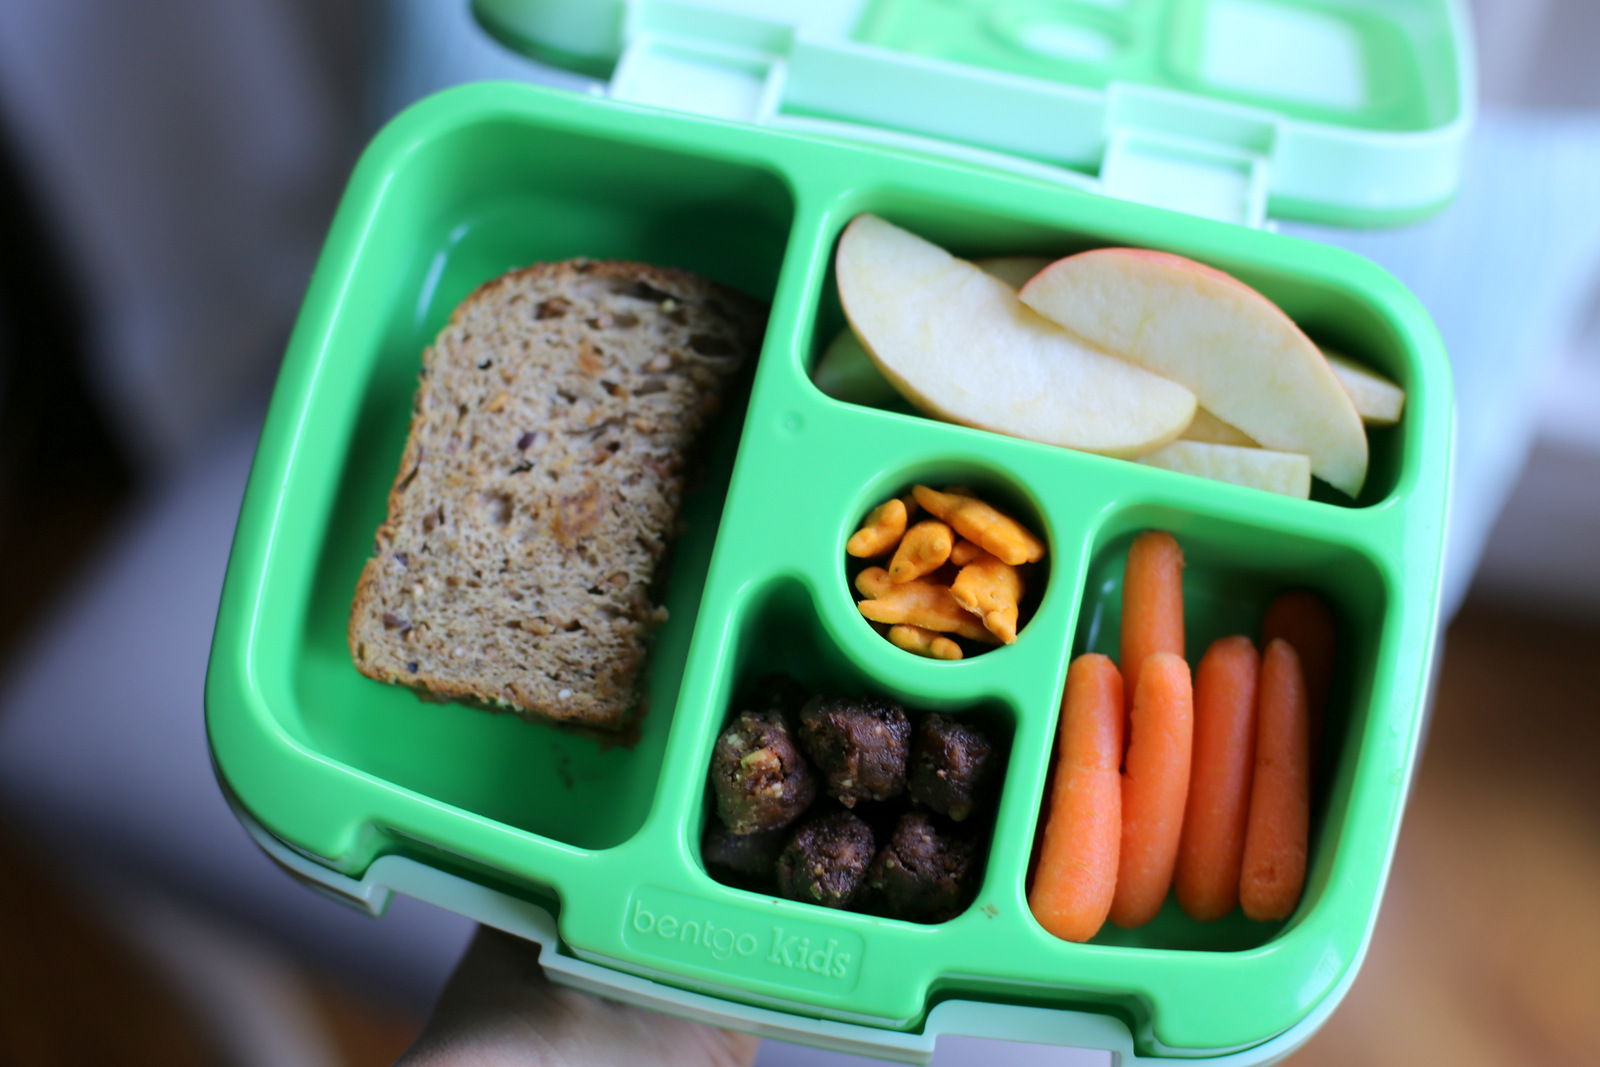 pre kindergarten lunch ideas